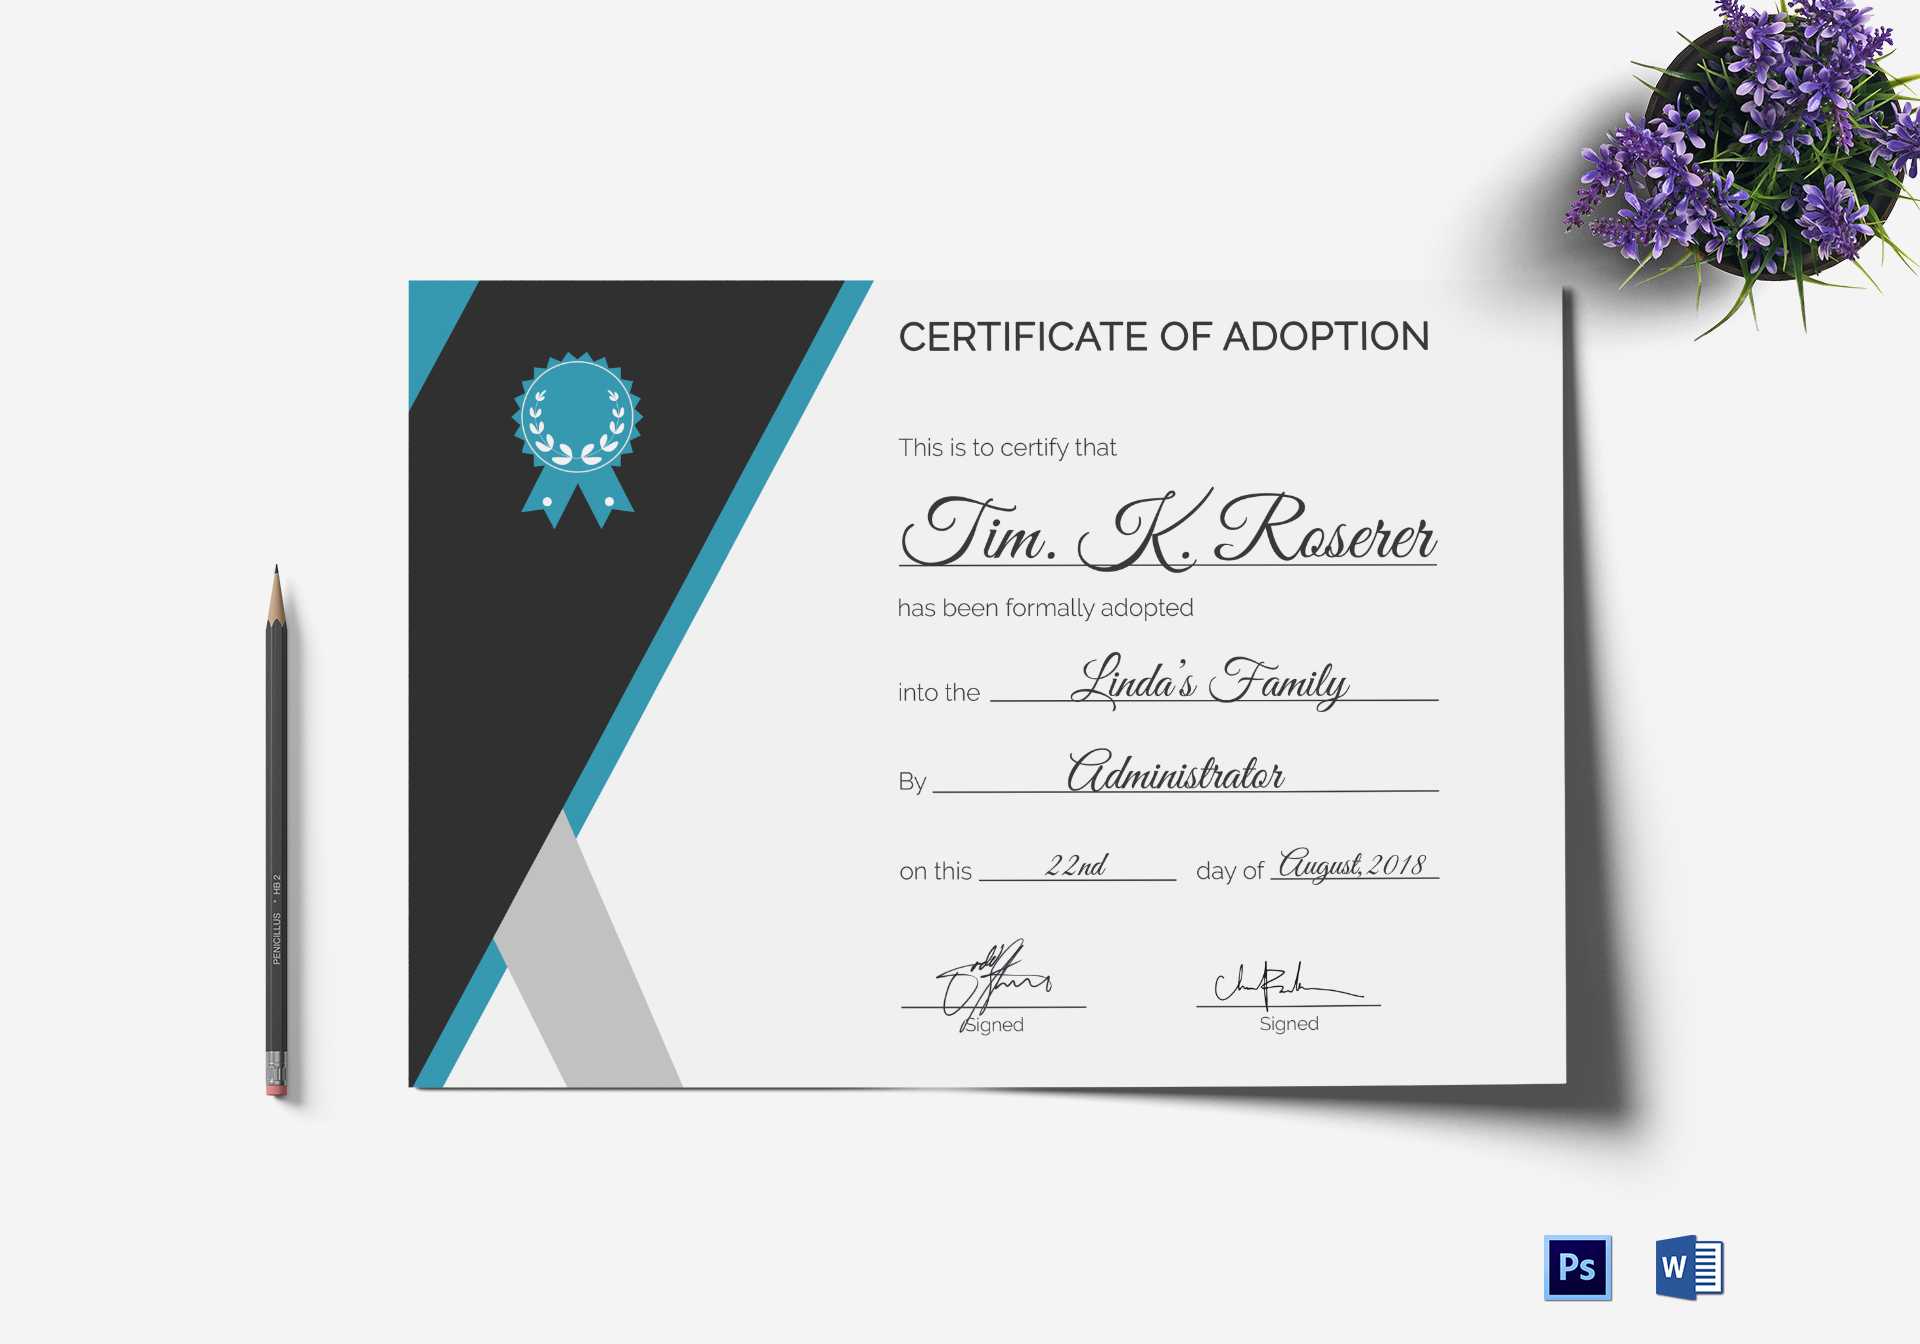 Adoption Certificate Template For Pet Adoption Certificate Template